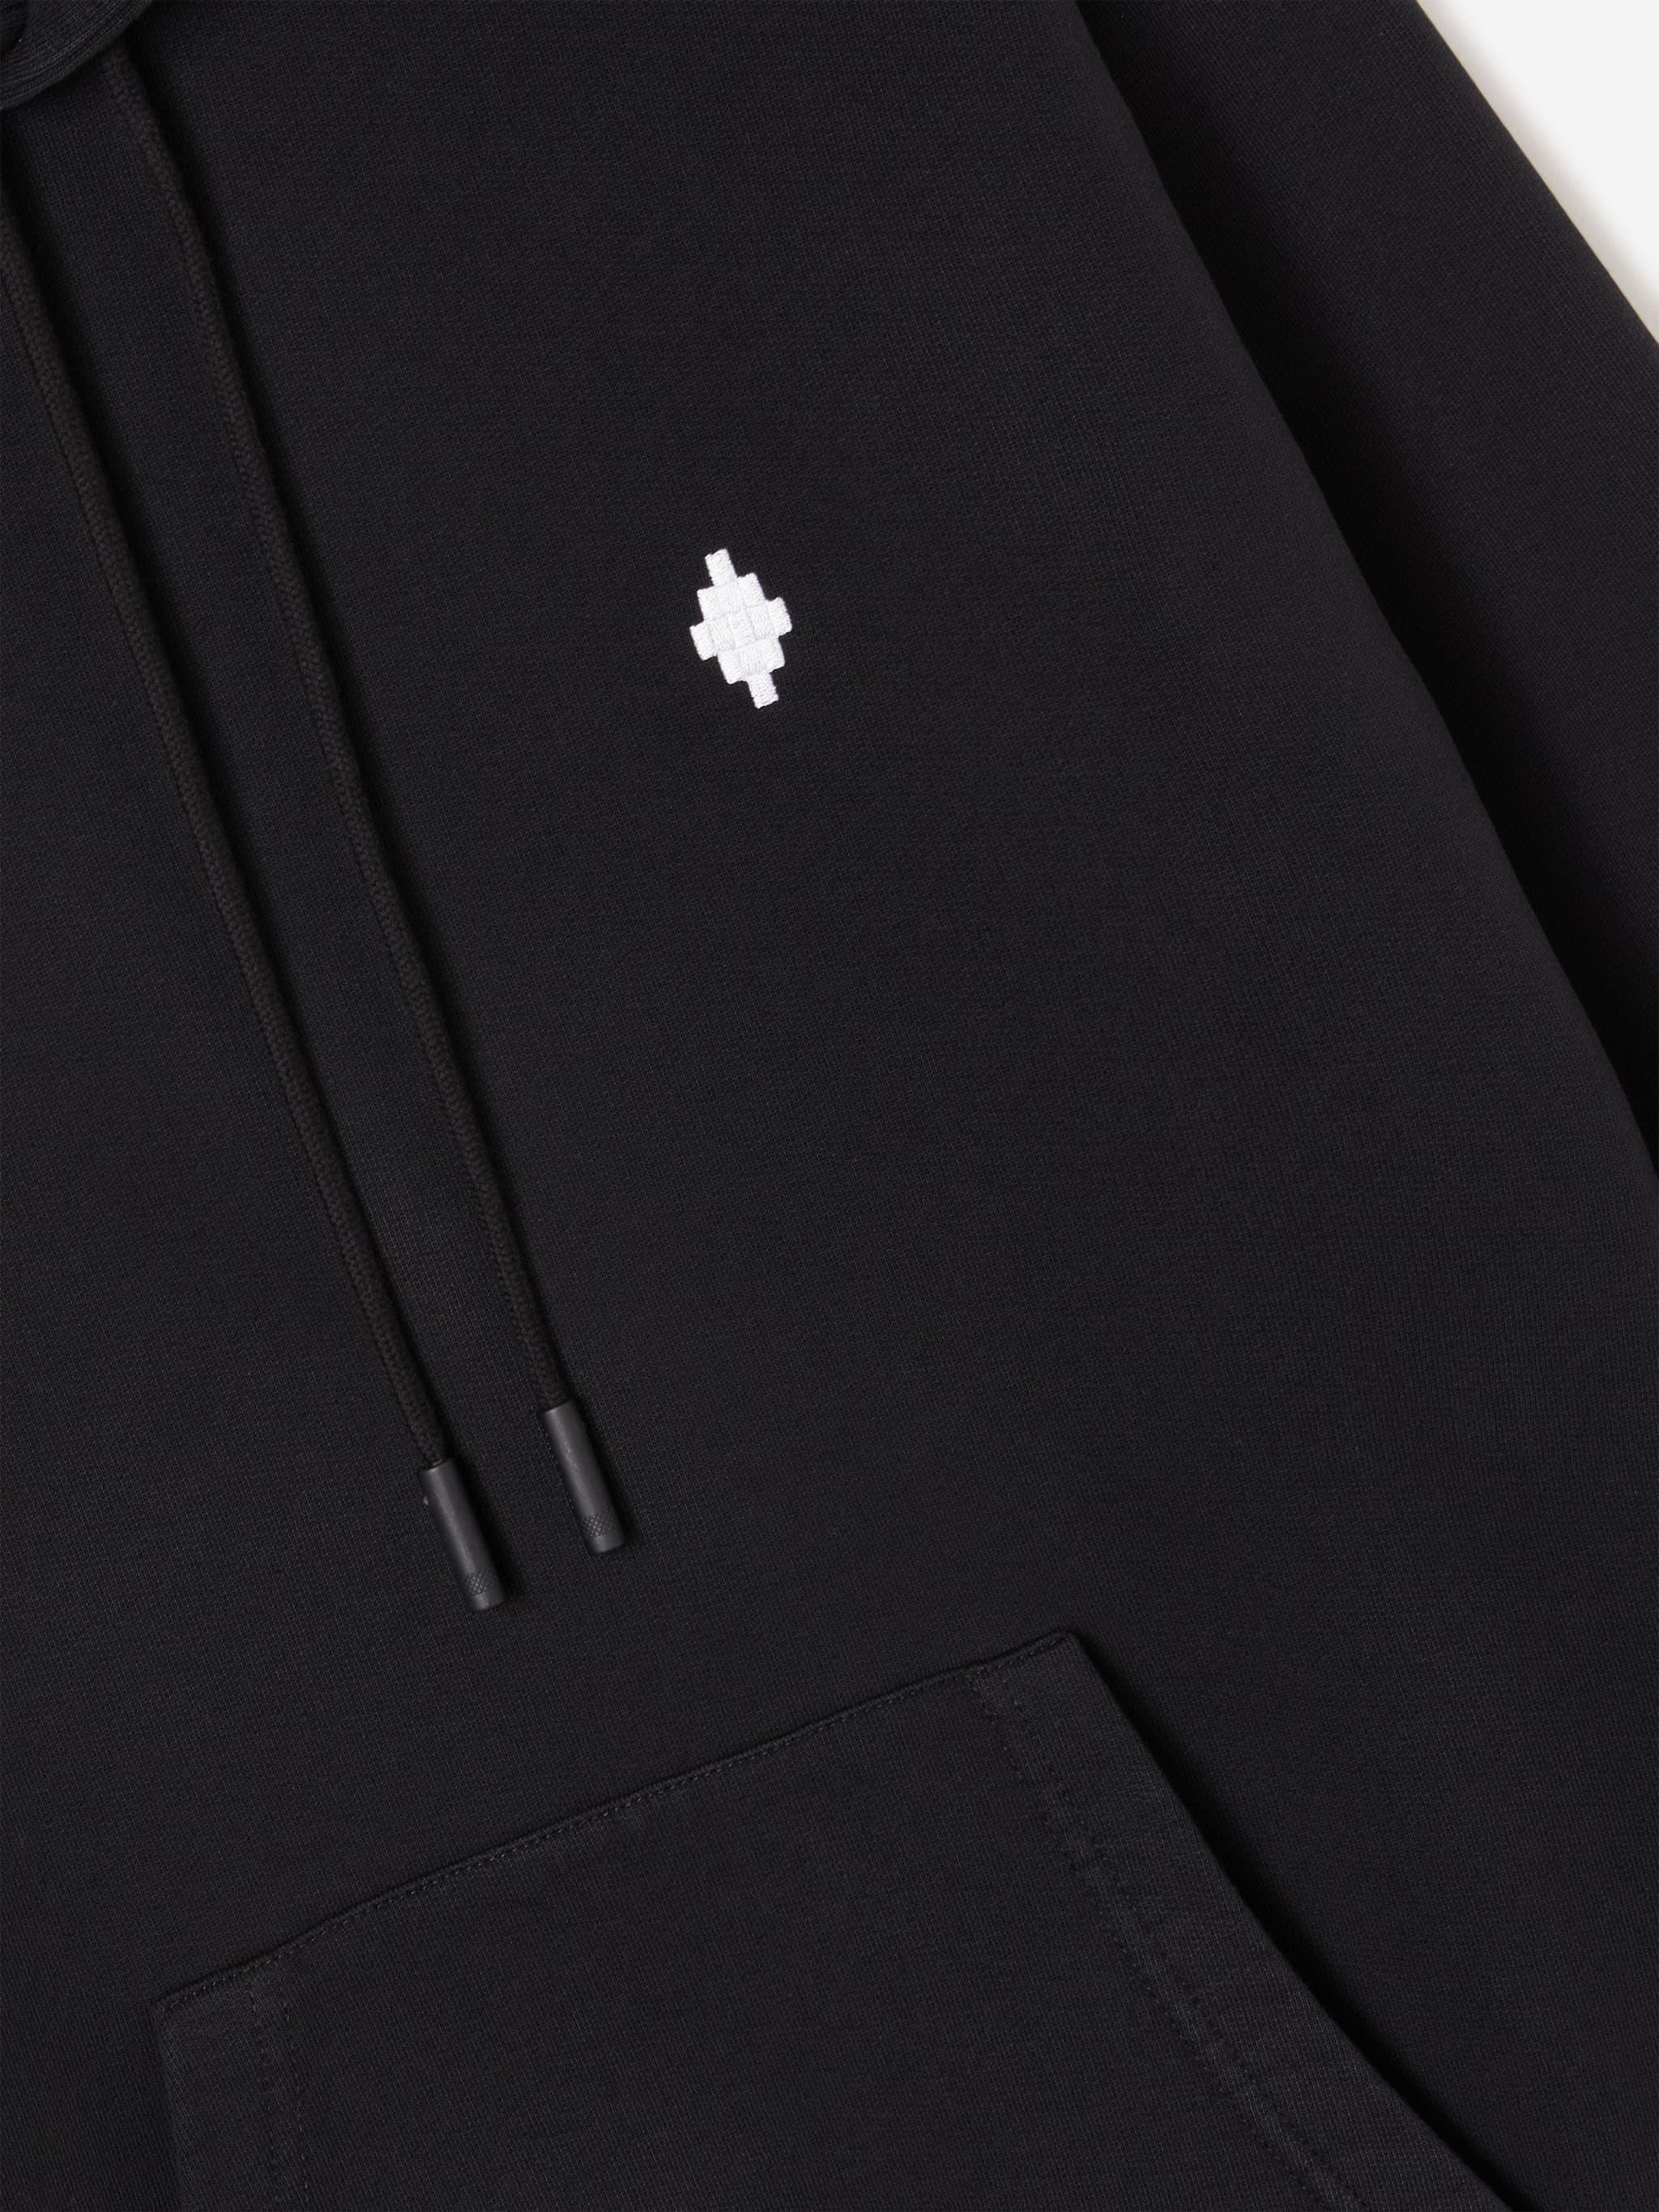 black cotton signature Cross motif classic hood long sleeves single patch pocket